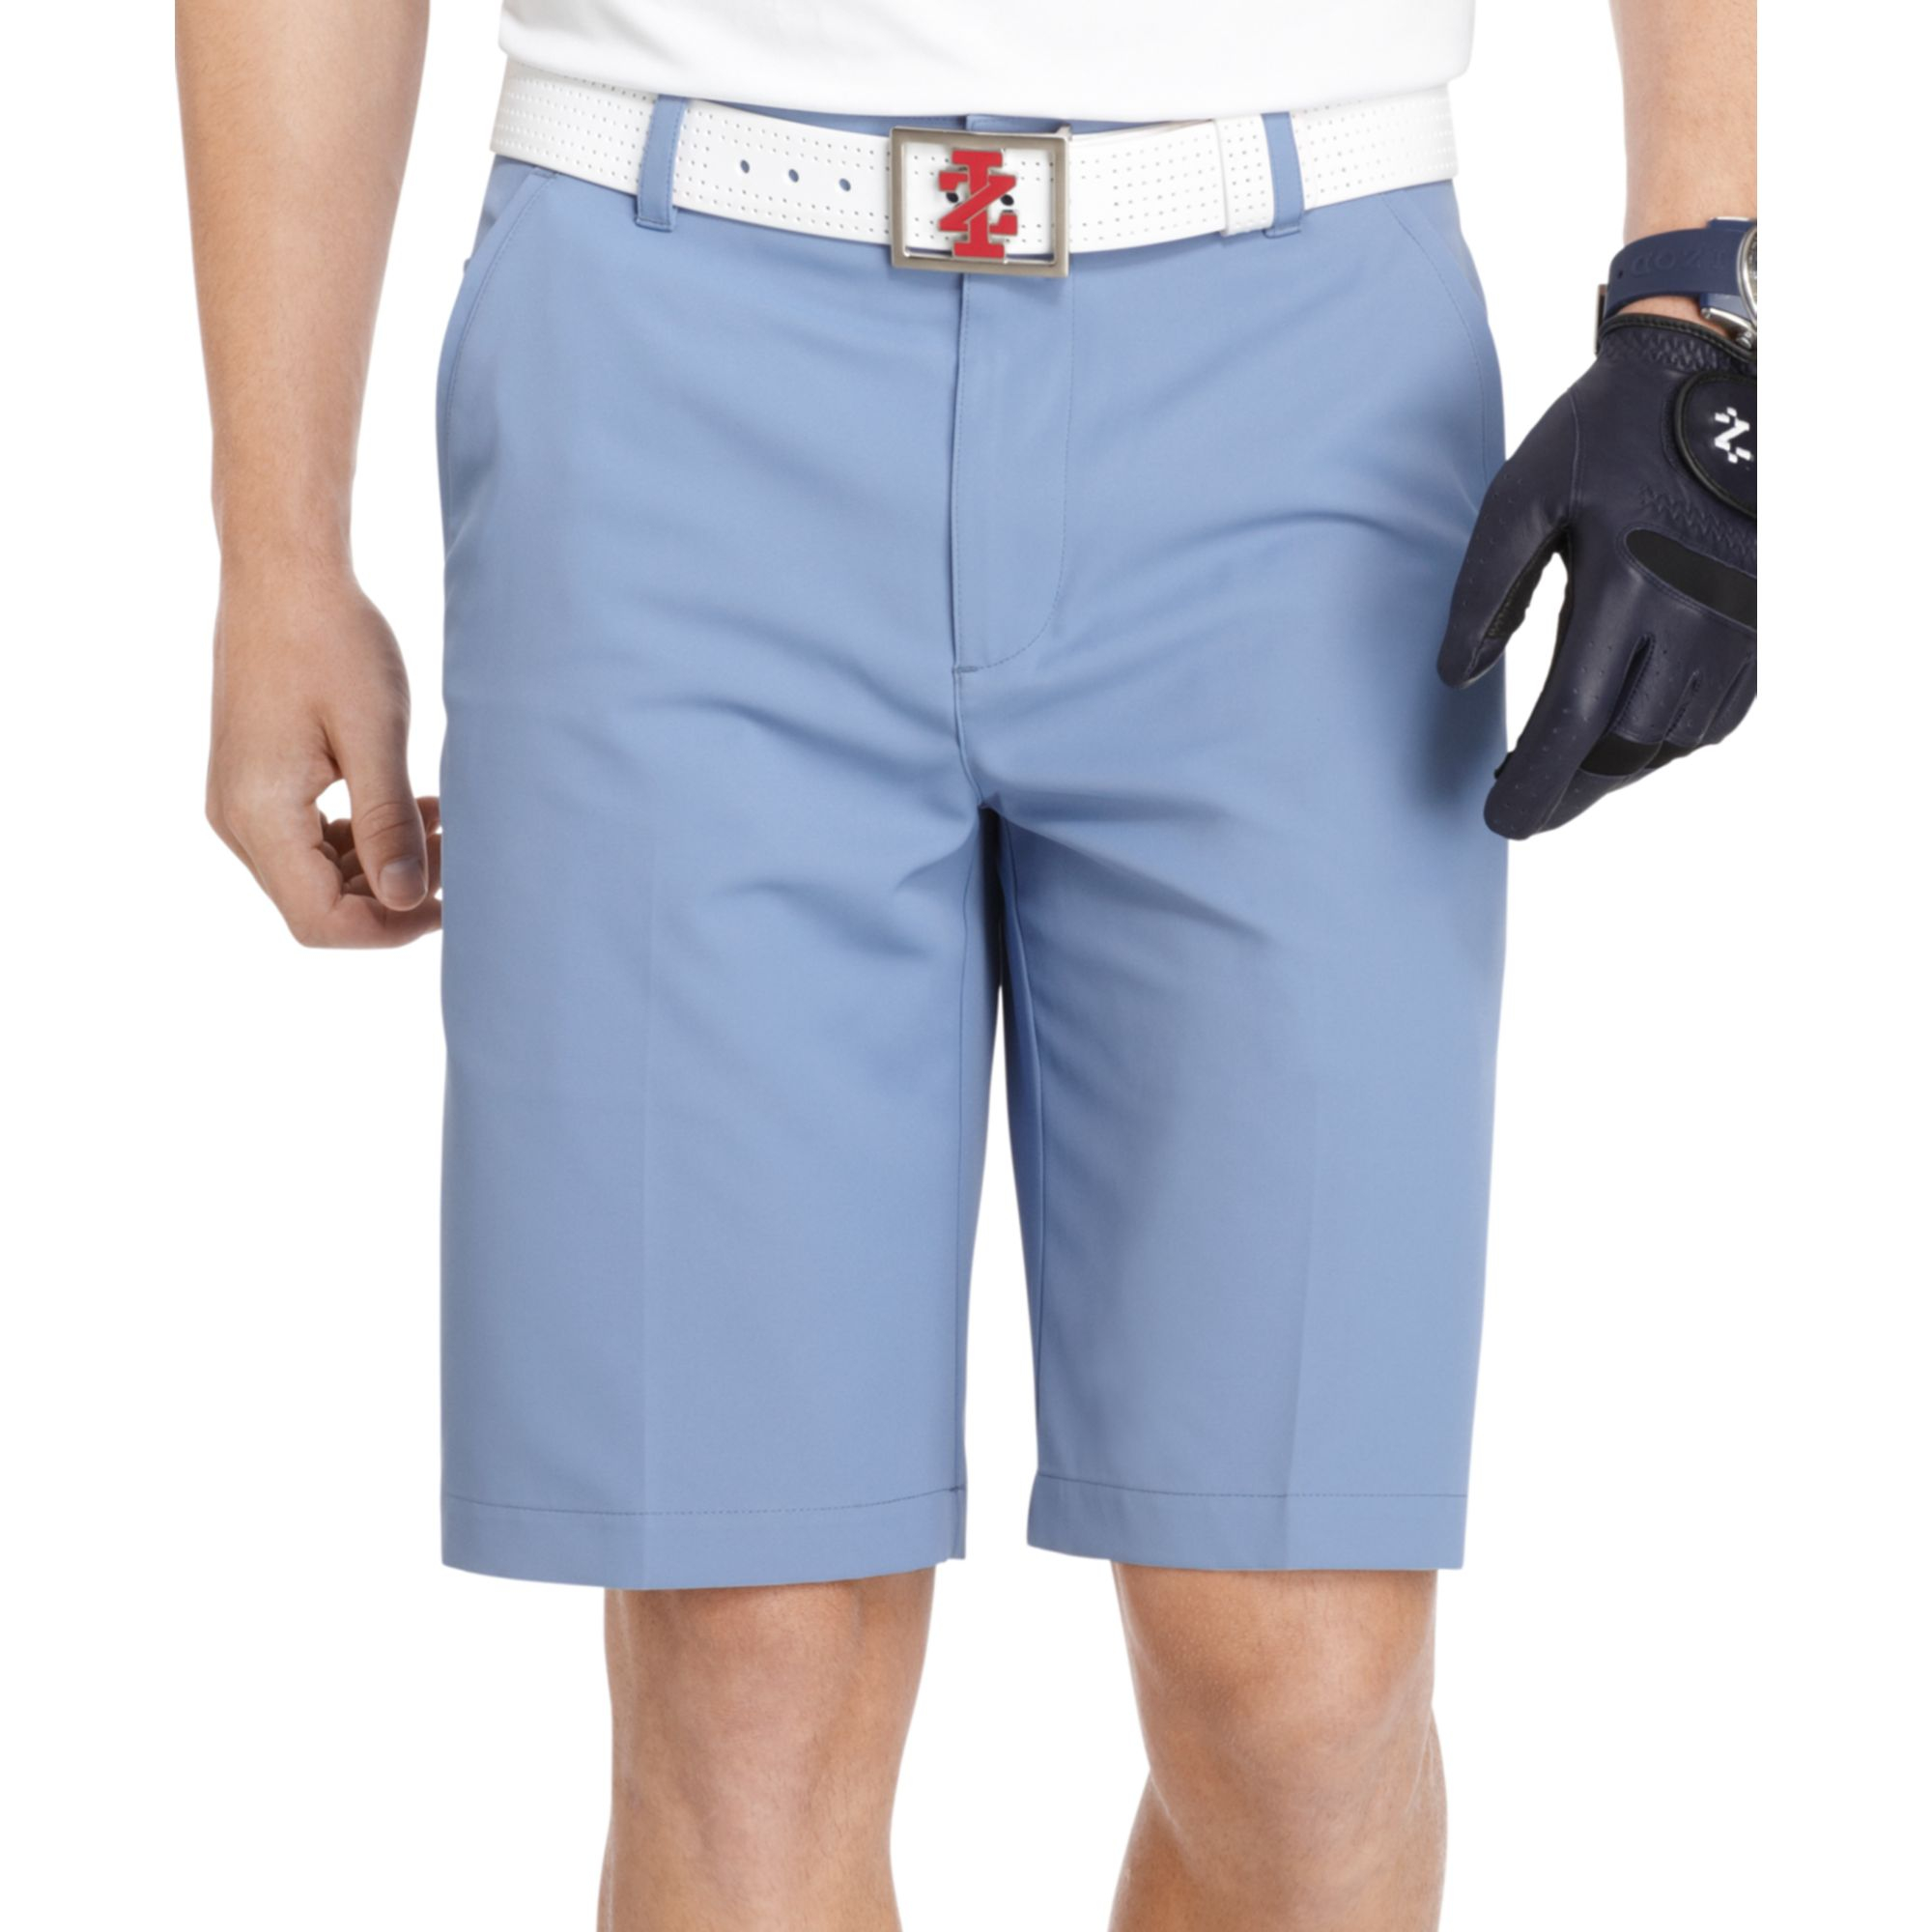 Izod Slim Fit Performance Golf Shorts in Blue for Men - Lyst